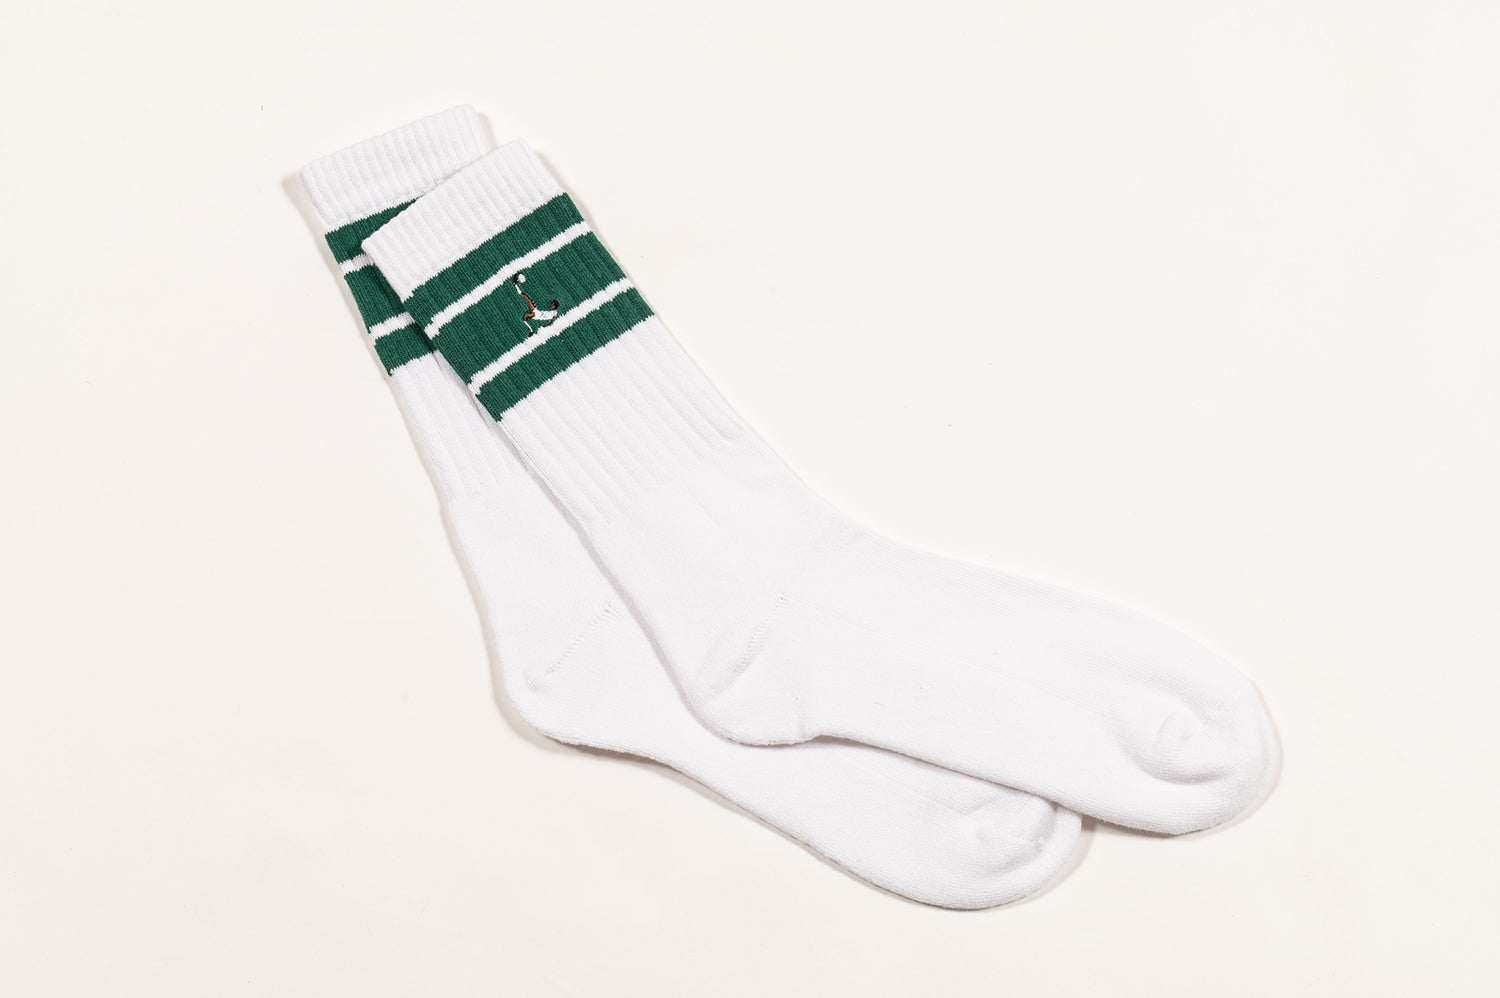 VSS Studio x New York Cosmos Pelé Embroidered Socks - White/Green